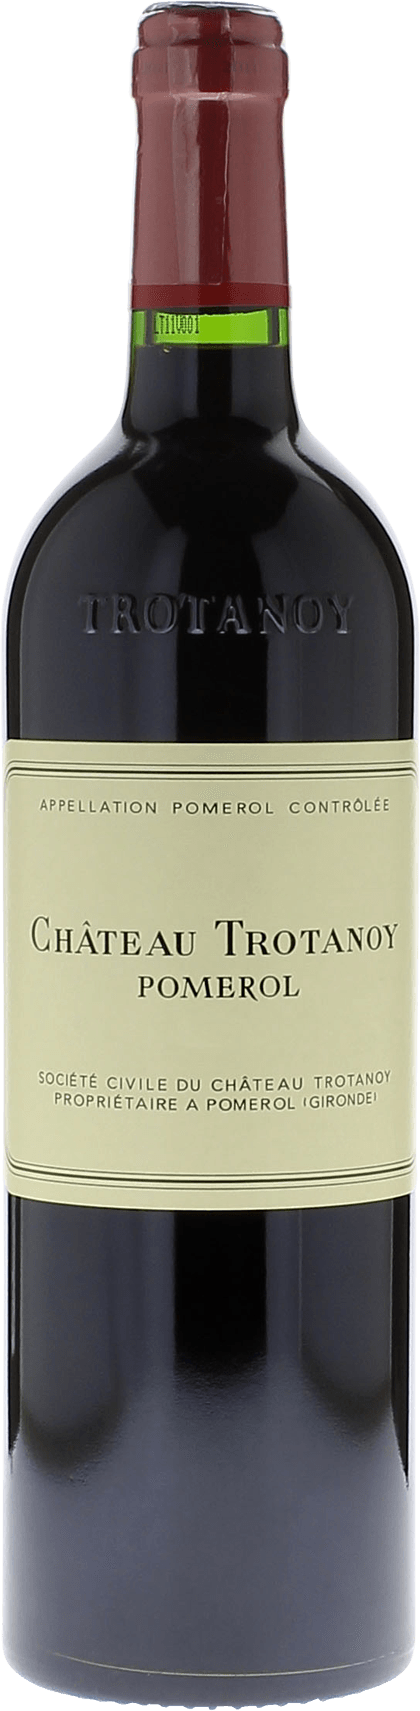 Trotanoy 2004  Pomerol, Bordeaux rouge